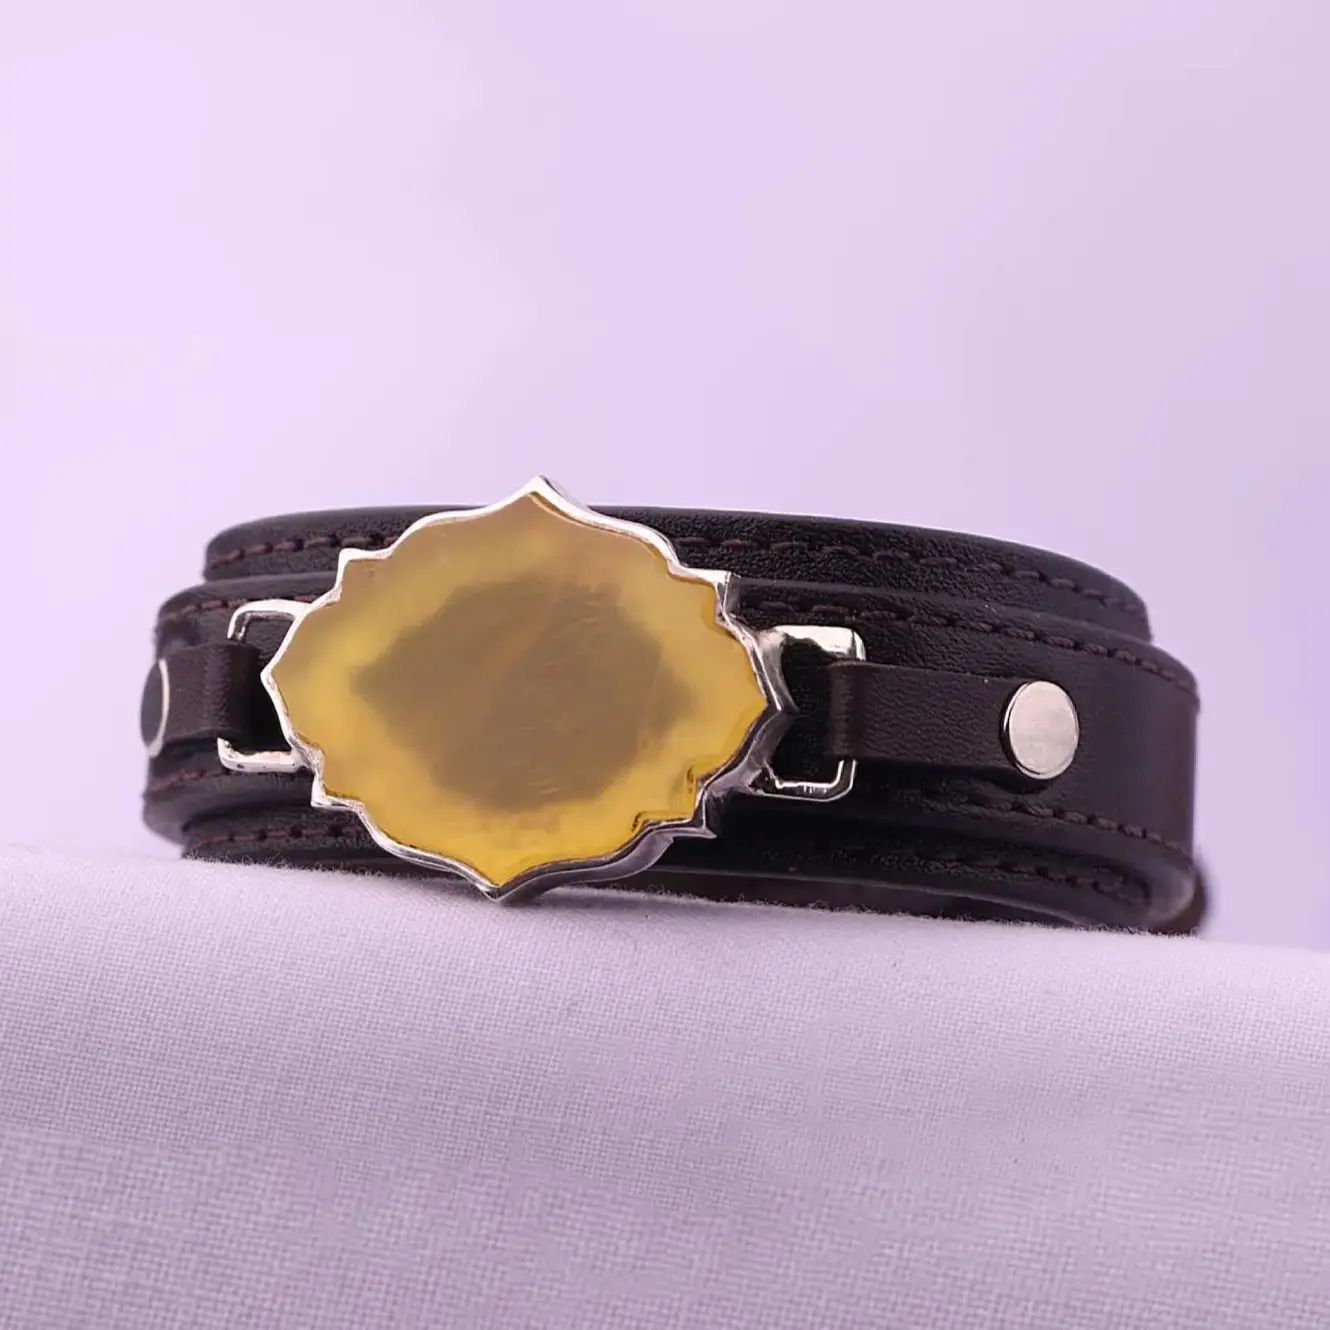 دستبند چرم مردانه عقیق زرد طرح شمسه